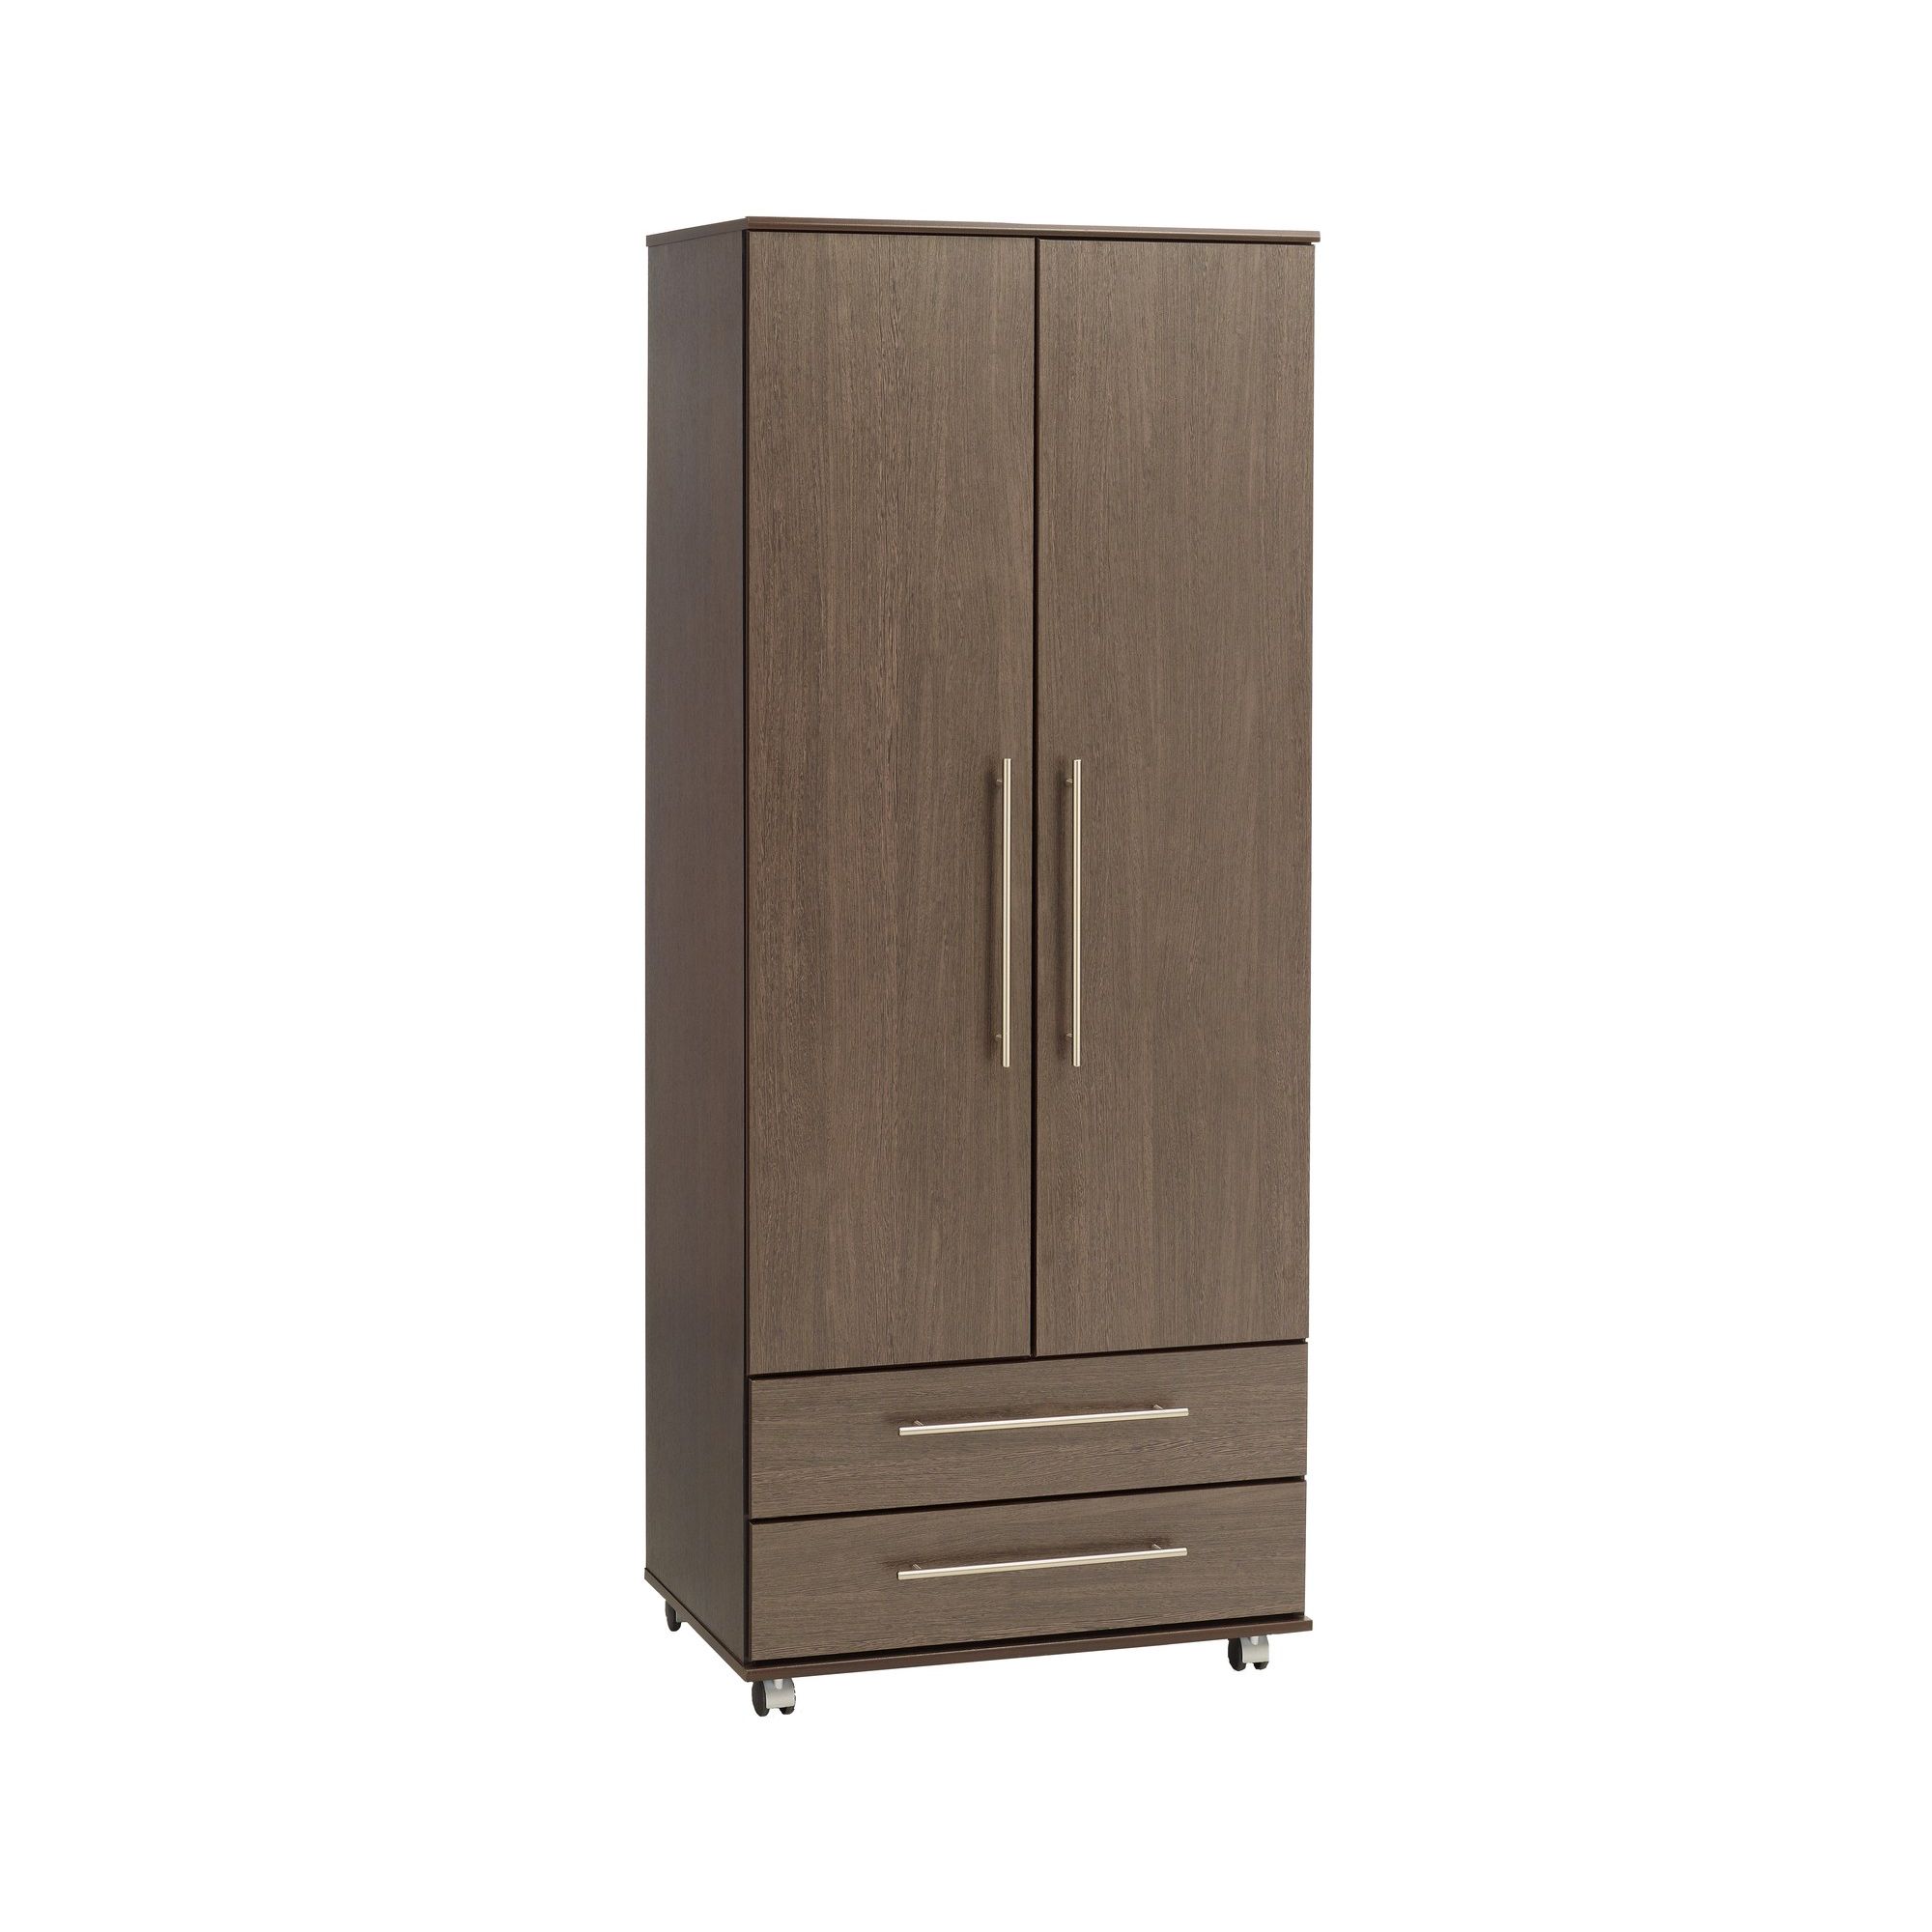 Ideal Furniture New York Combi Wardrobe - Oak at Tesco Direct